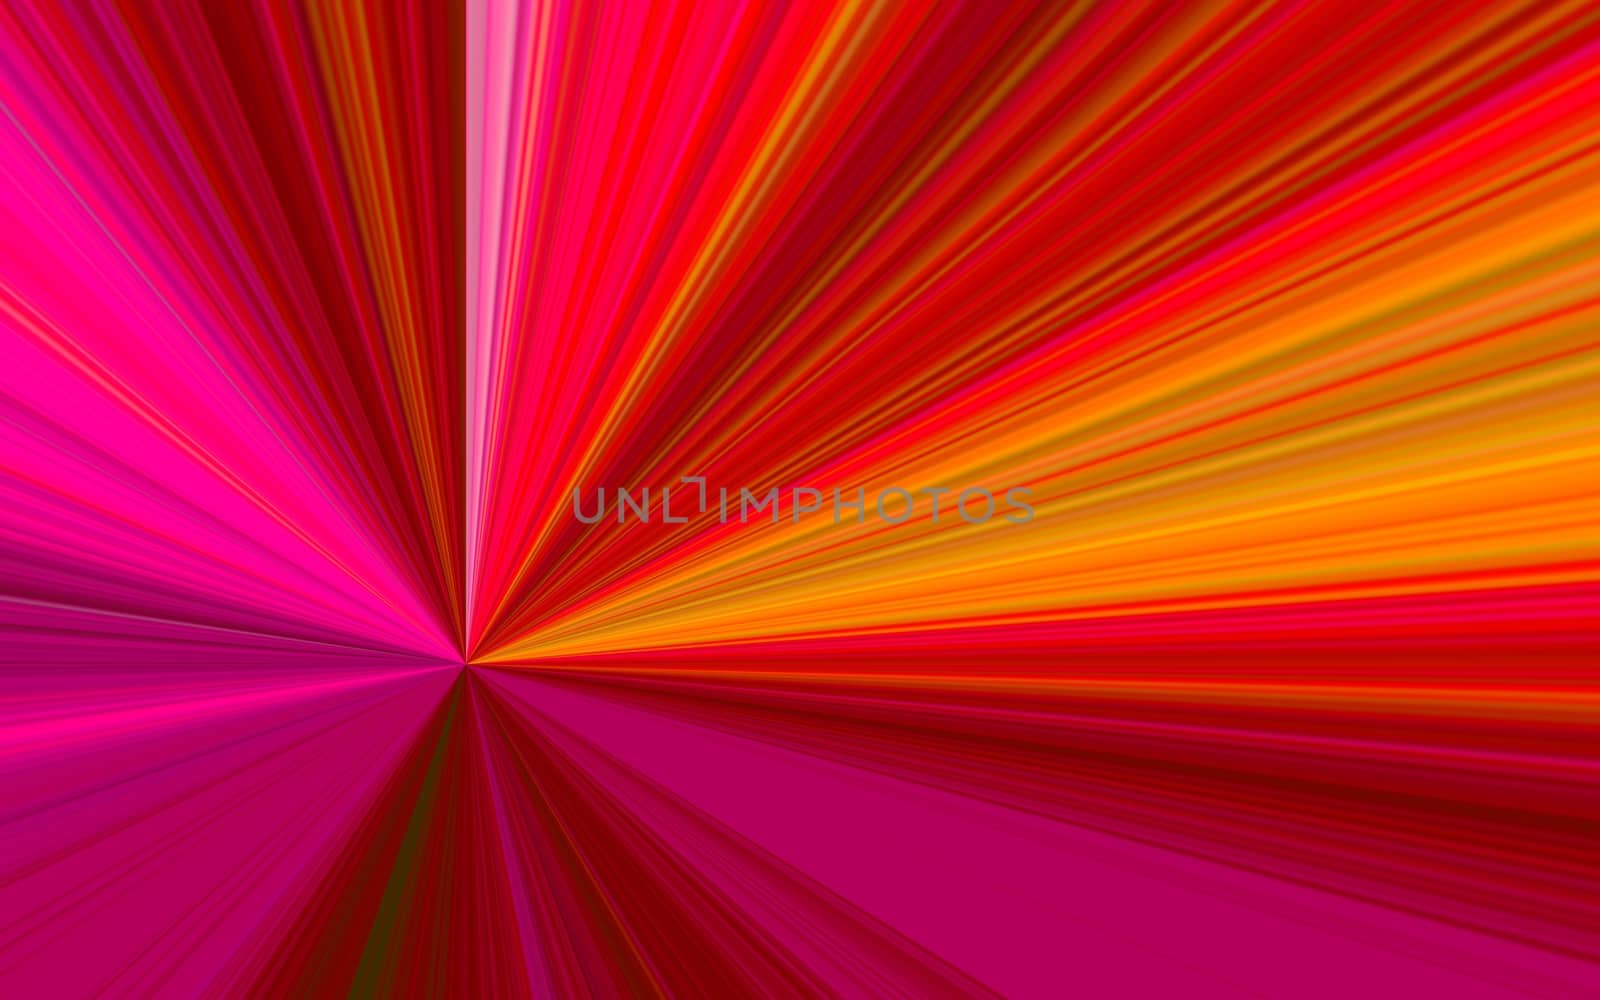 illustration of red sunburst - digital high resolution by a3701027